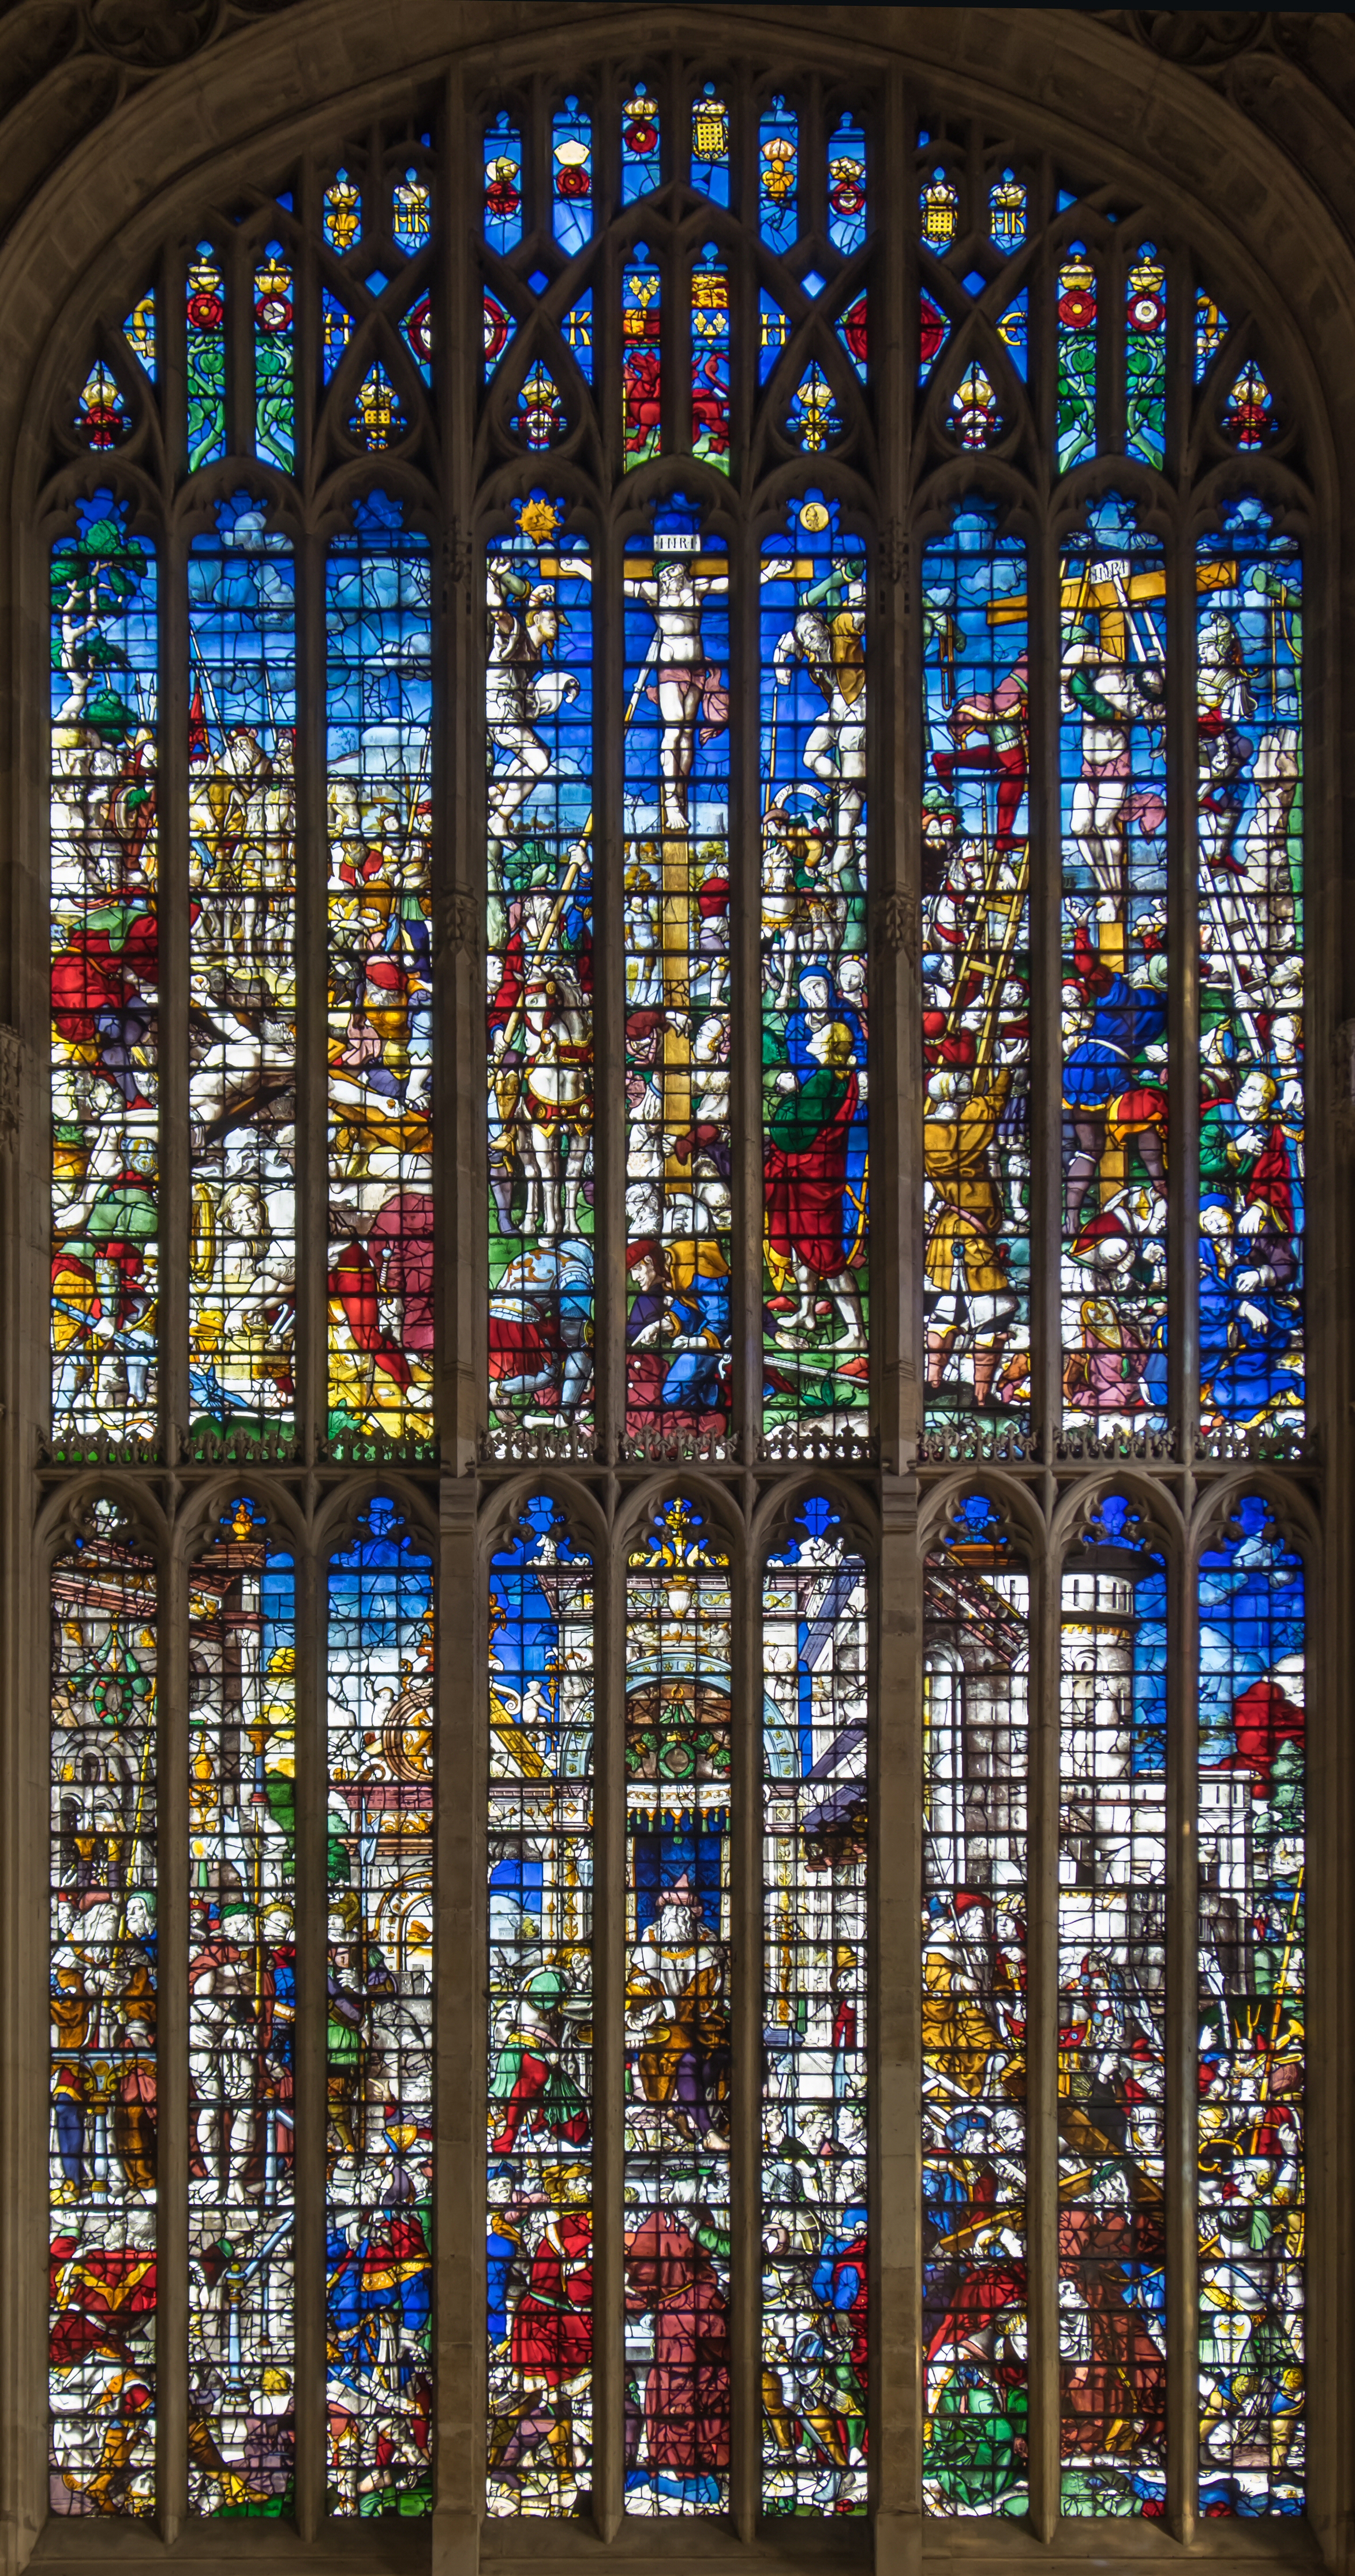 King's College Chapel, Cambridge - The Great East Window